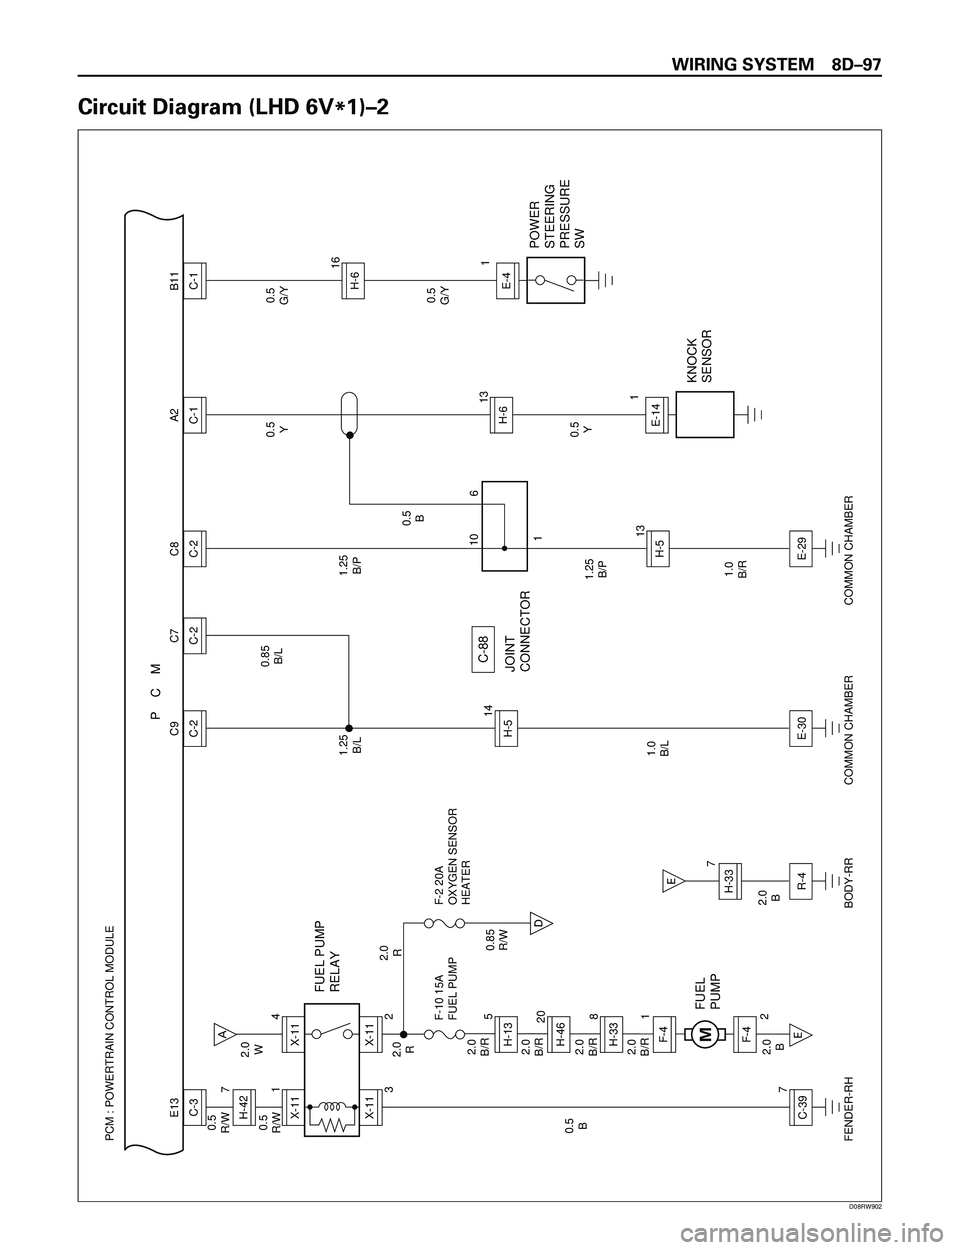 ISUZU TROOPER 1998  Service Repair Manual WIRING SYSTEM 8DÐ97
Circuit Diagram (LHD 6V
*1)Ð2
PCM : POWERTRAIN CONTROL MODULE 
P    C    M
AE
E 0.5
B
1.0
B/L 0.5
R/W
0.5
R/W
X-111C-397 7
3X-11C-3 E13
FUEL PUMP
RELAY
FUEL 
PUMP
F-10 15A
FUEL P